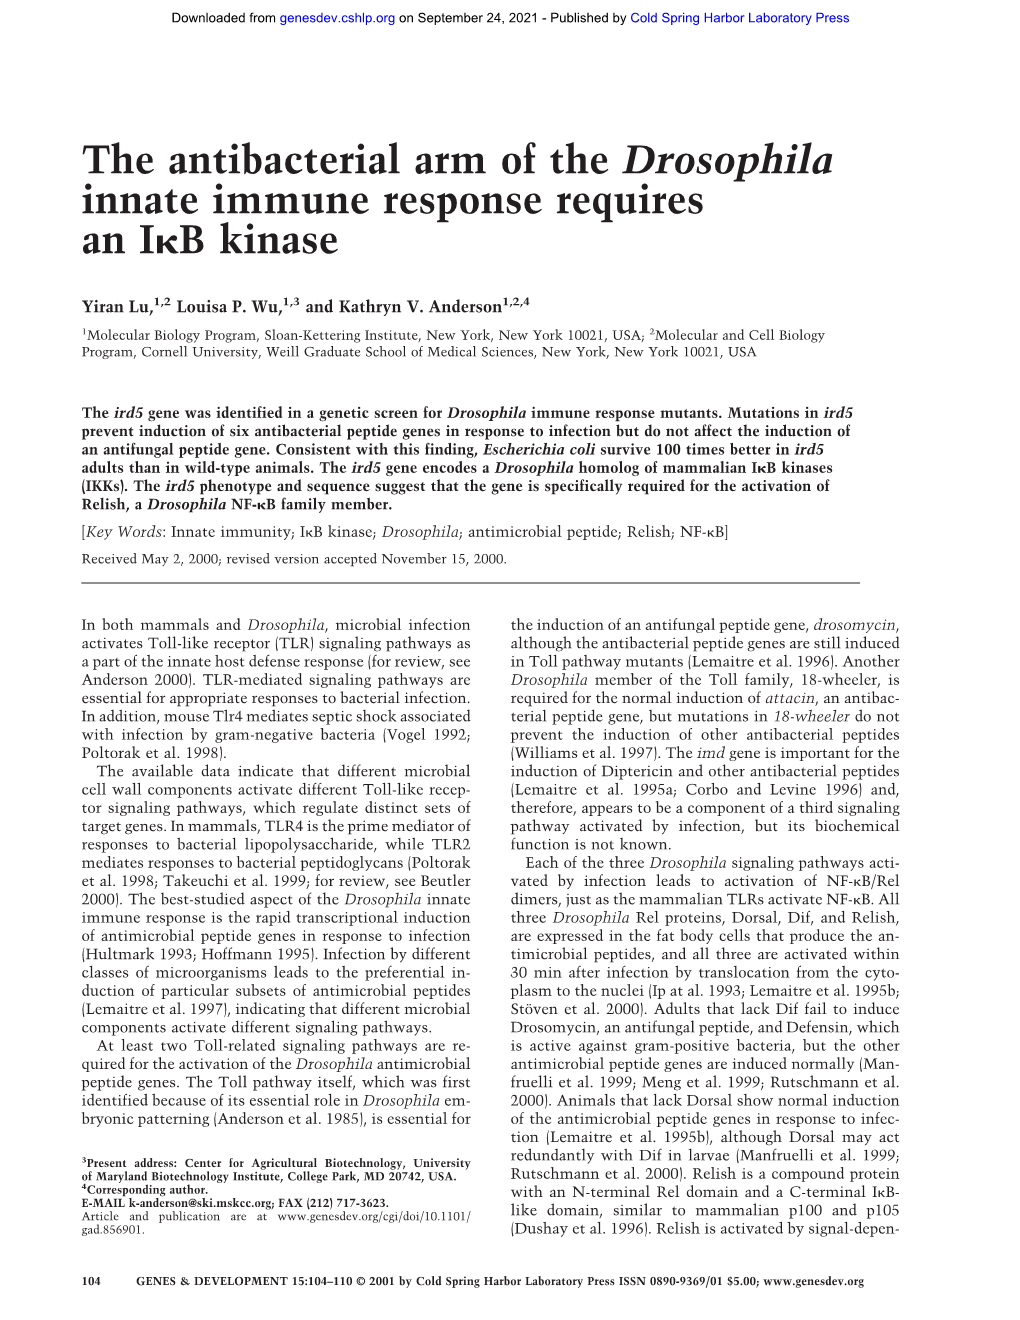 The Antibacterial Arm of the Drosophila Innate Immune Response Requires an I␬B Kinase